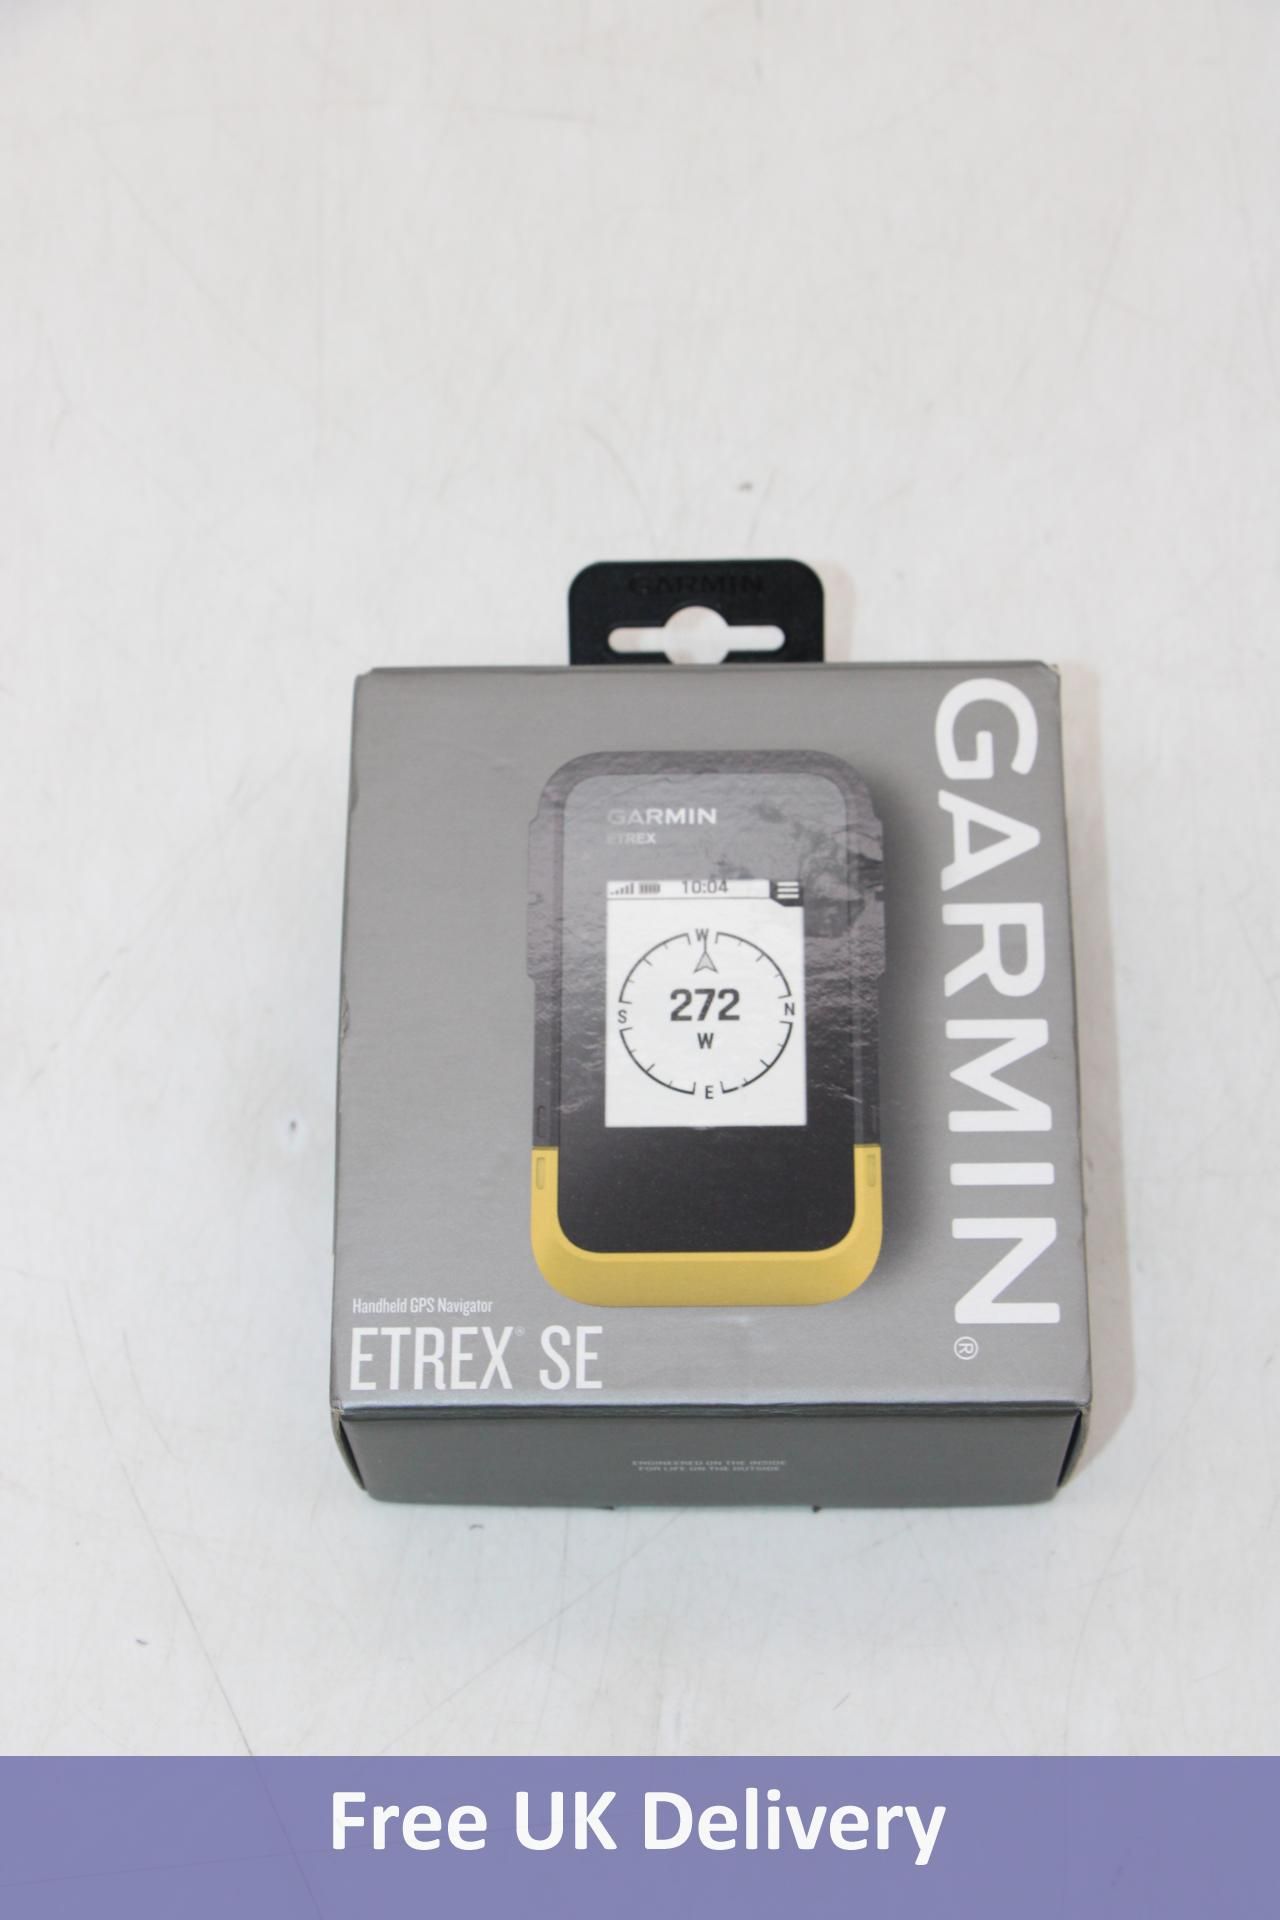 Garmin ETREX SE Handheld GPS Navigator. Box damaged, Untested